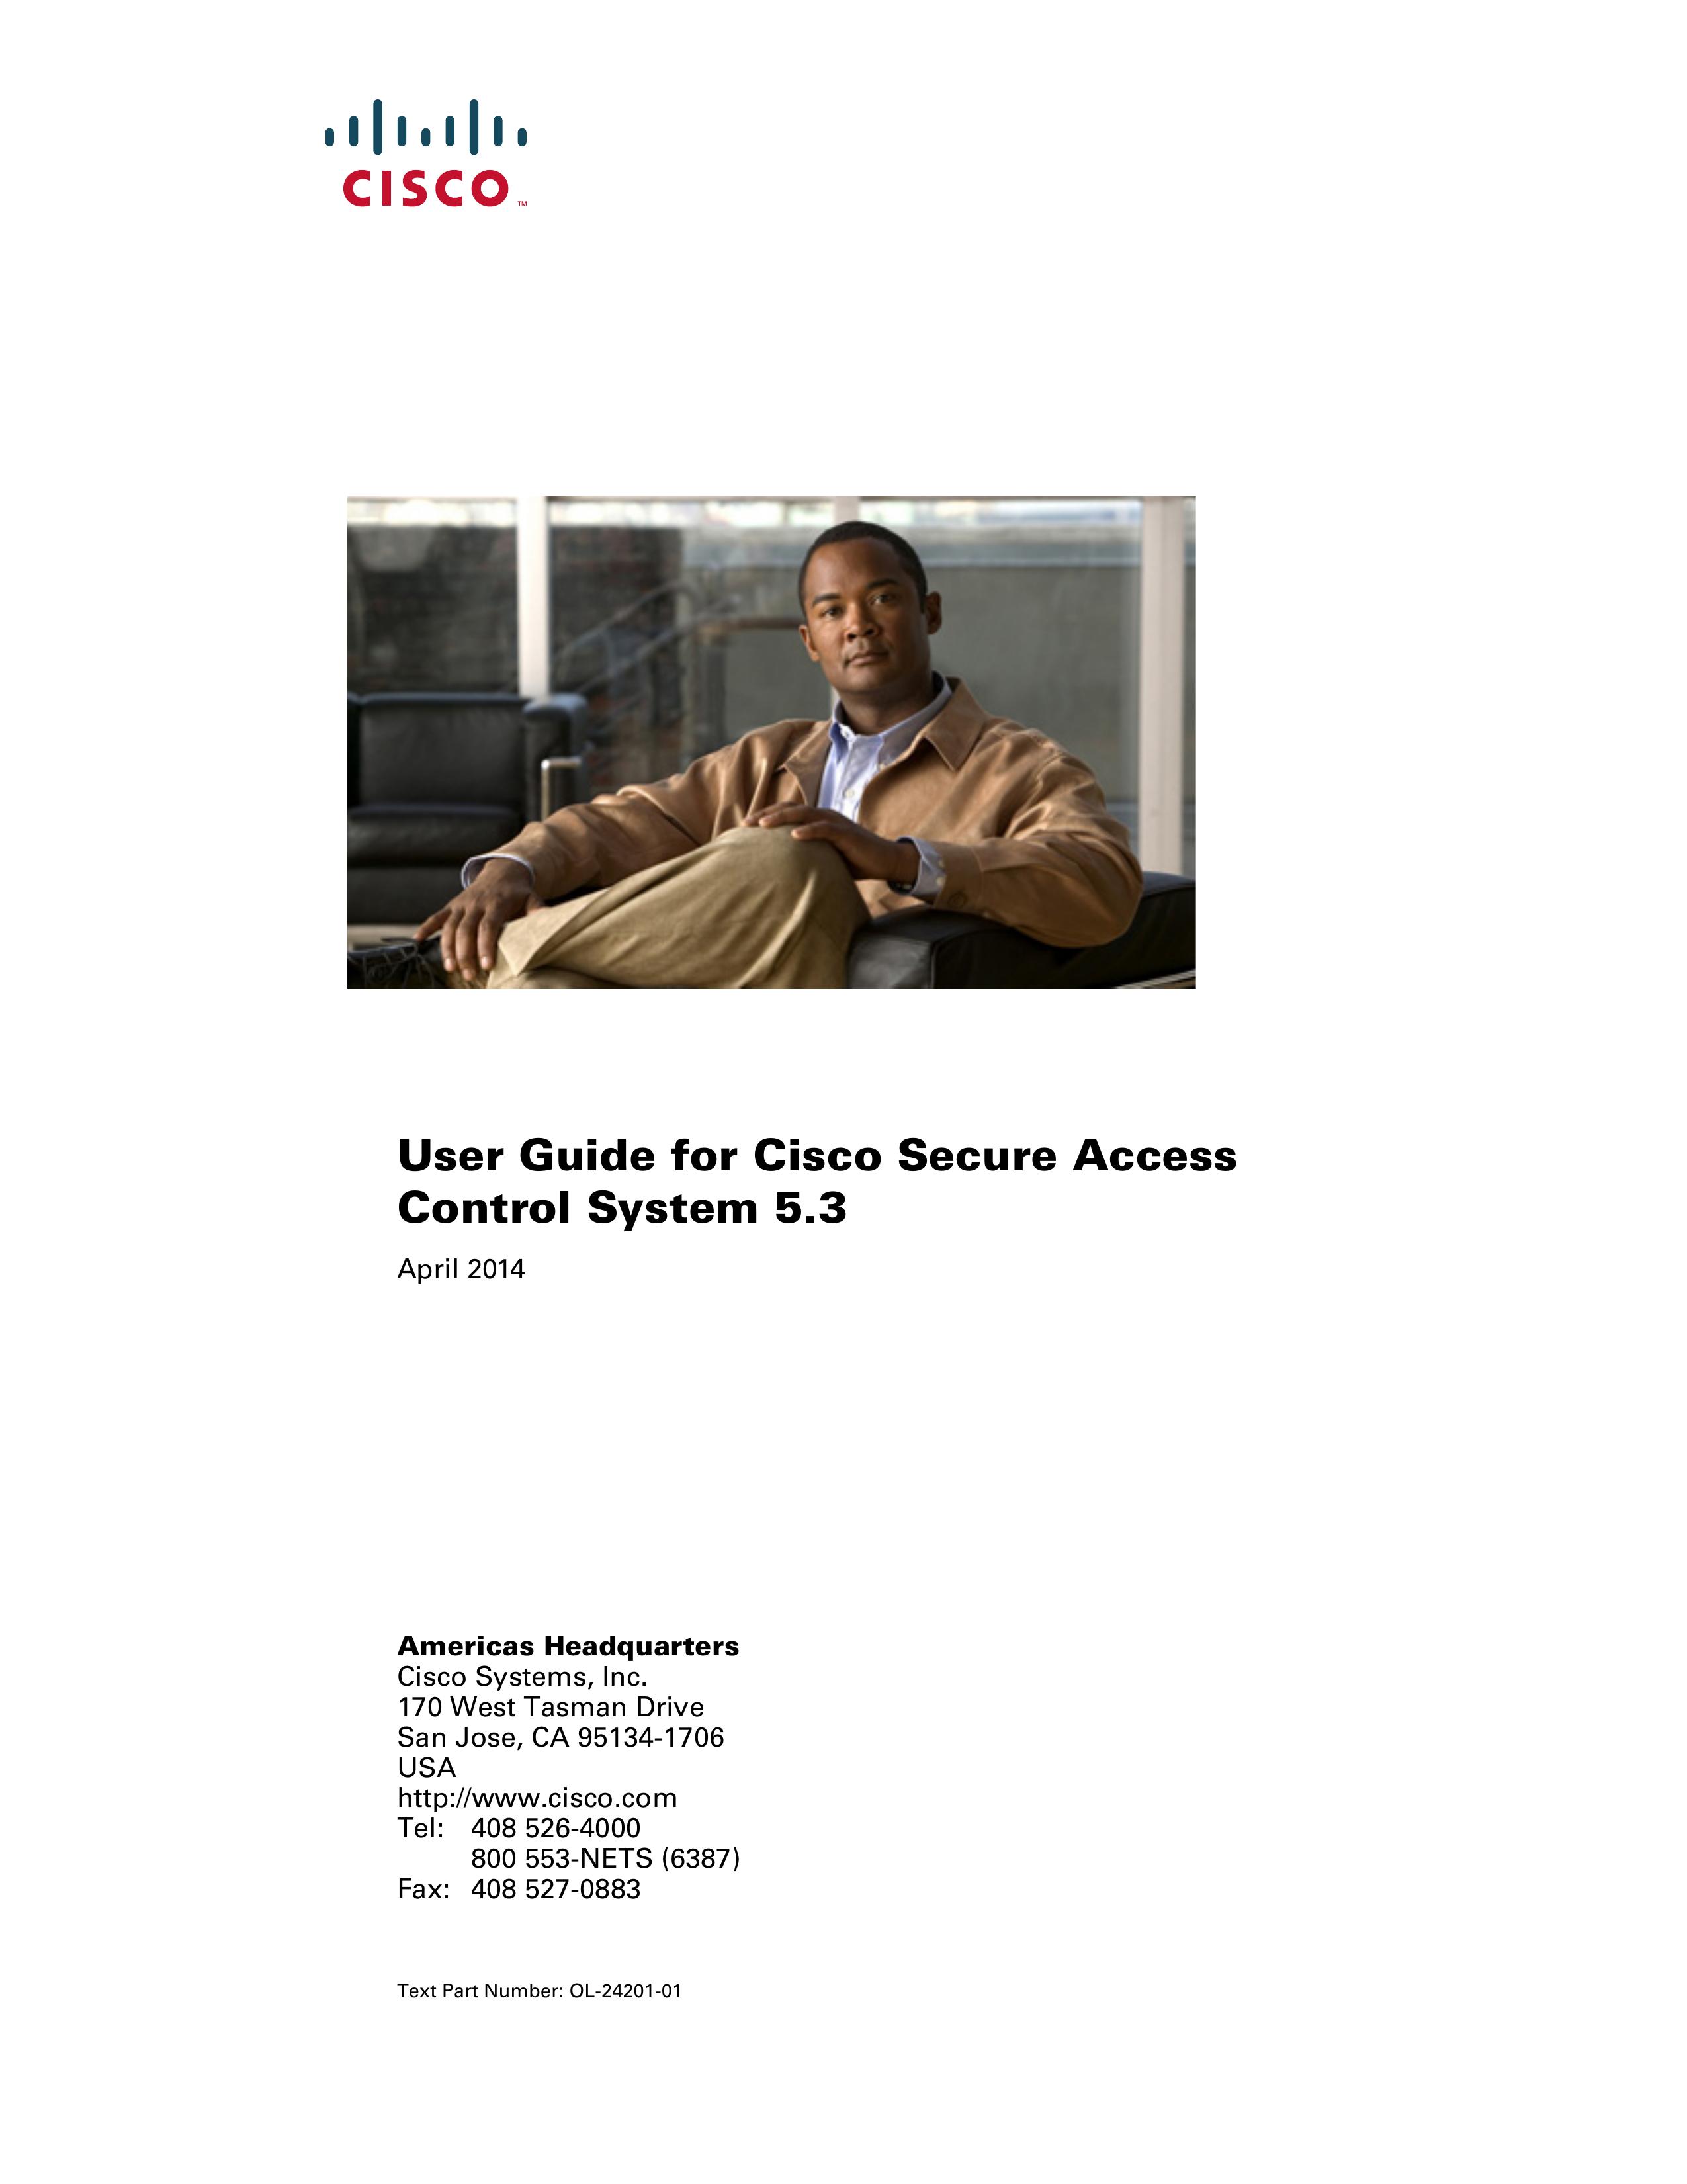 Cisco Systems OL-24201-01 Camera Accessories User Manual